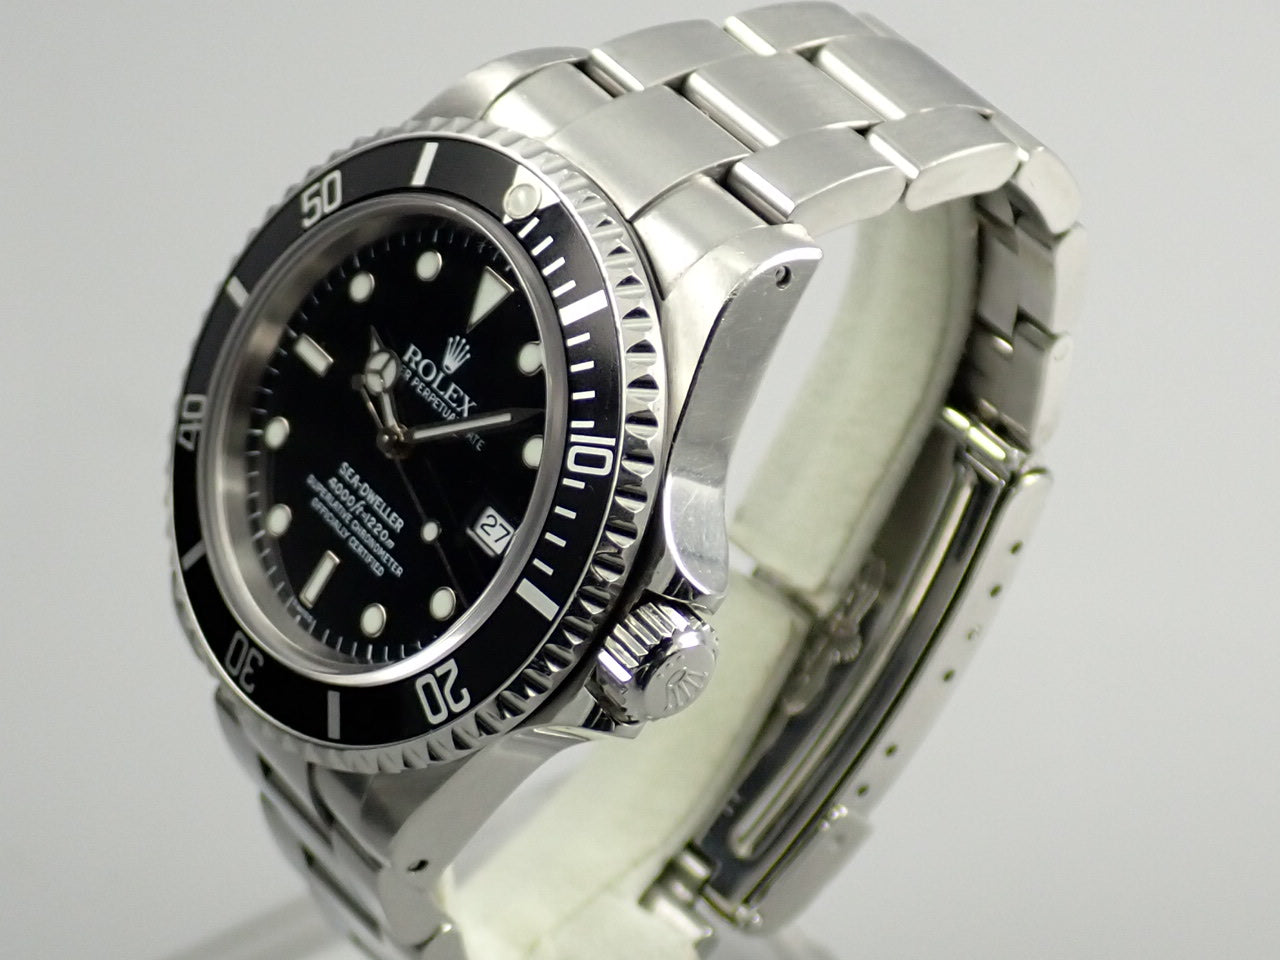 Rolex Sea-Dweller A-serial number &lt;Warranty, box, etc.&gt;